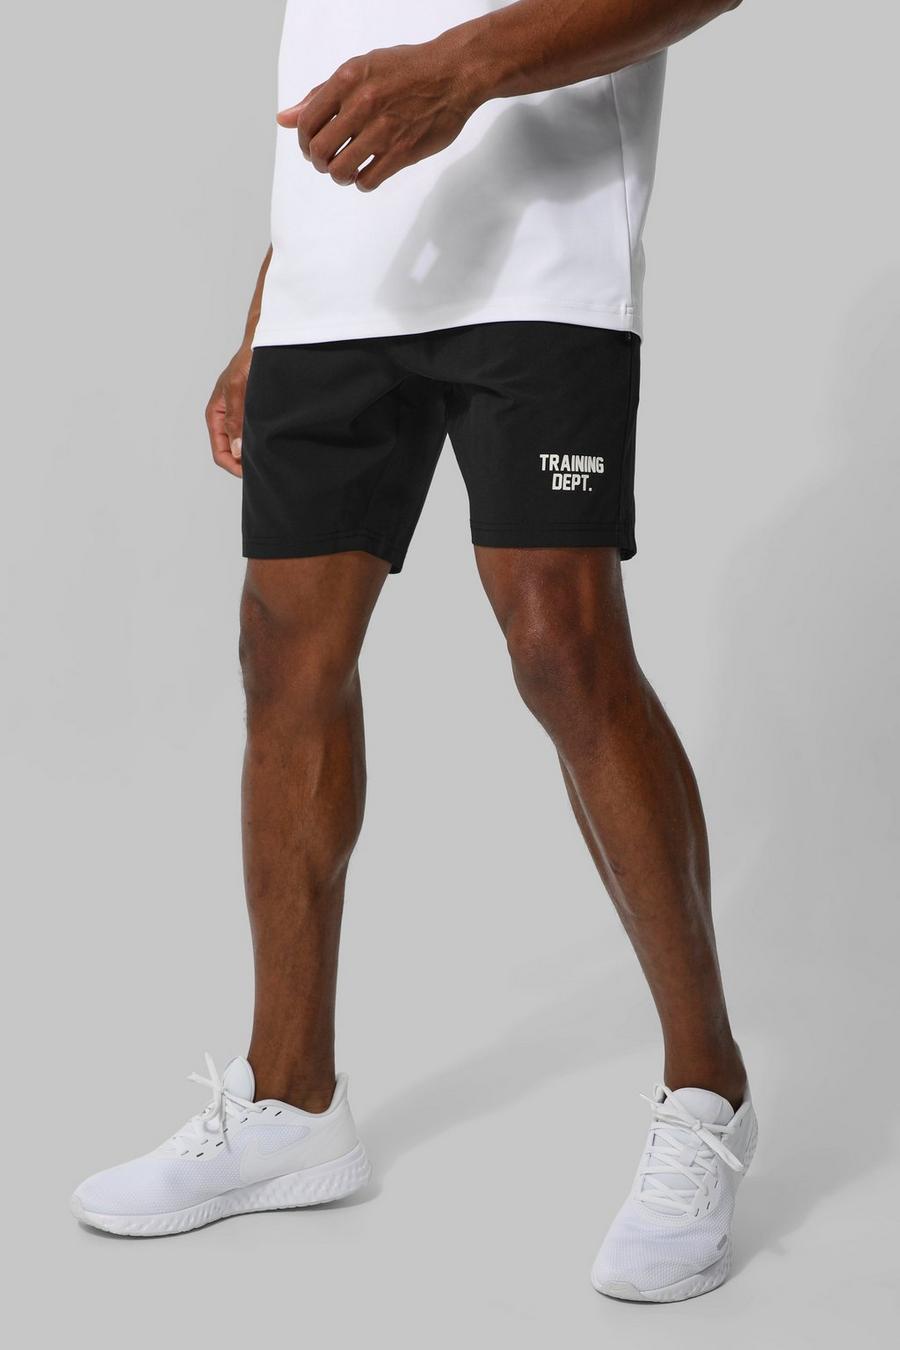 Black Man Active Performance Training Dept 5inch Shorts image number 1